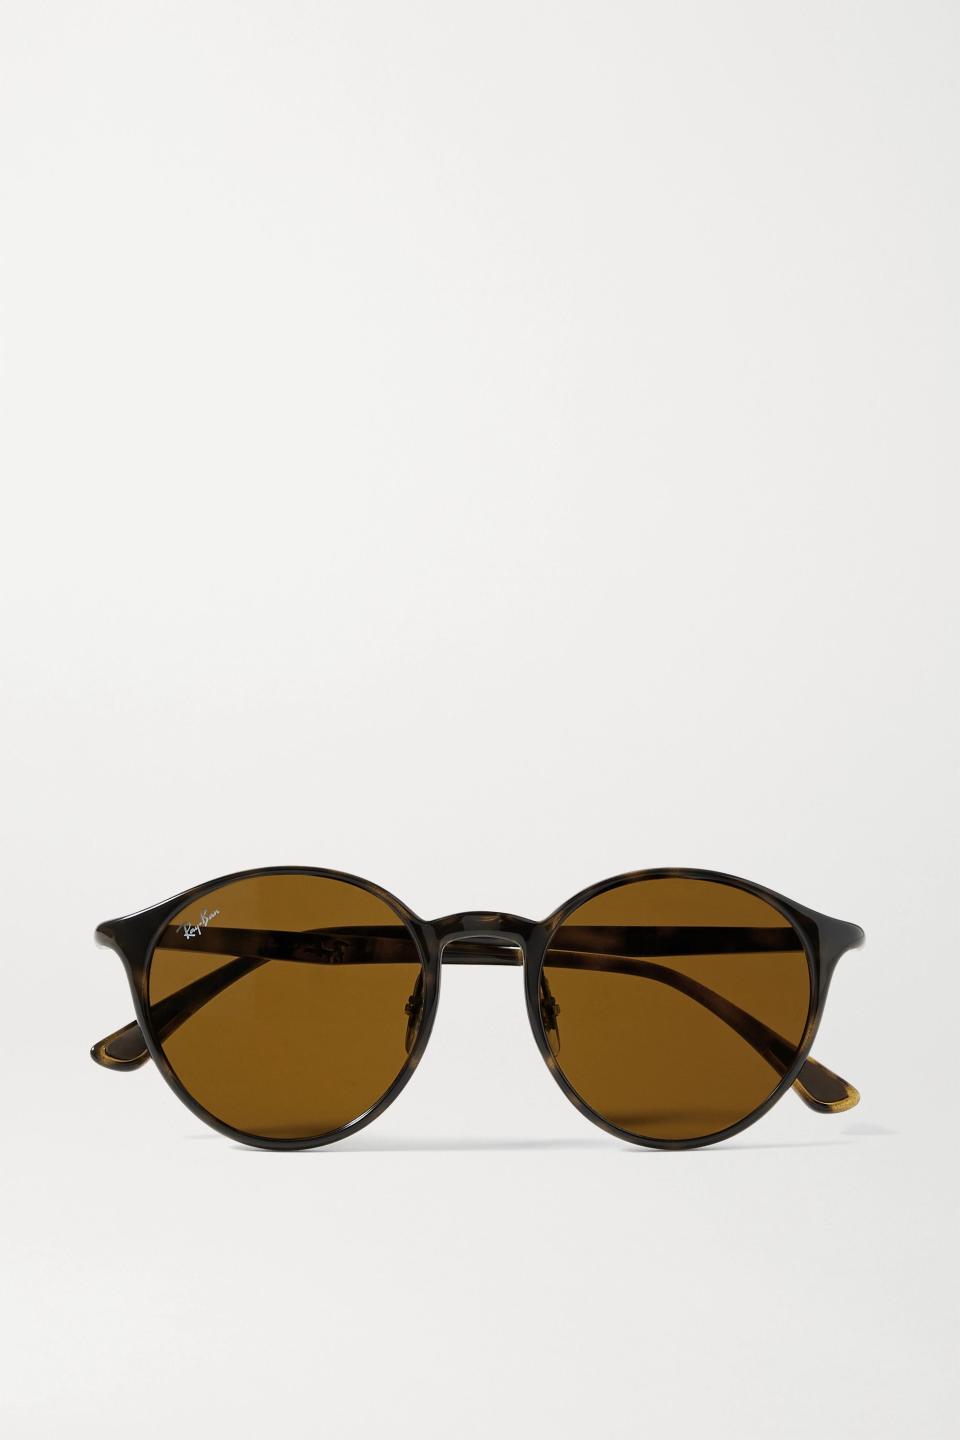 1) Round-Frame Tortoiseshell Acetate Sunglasses